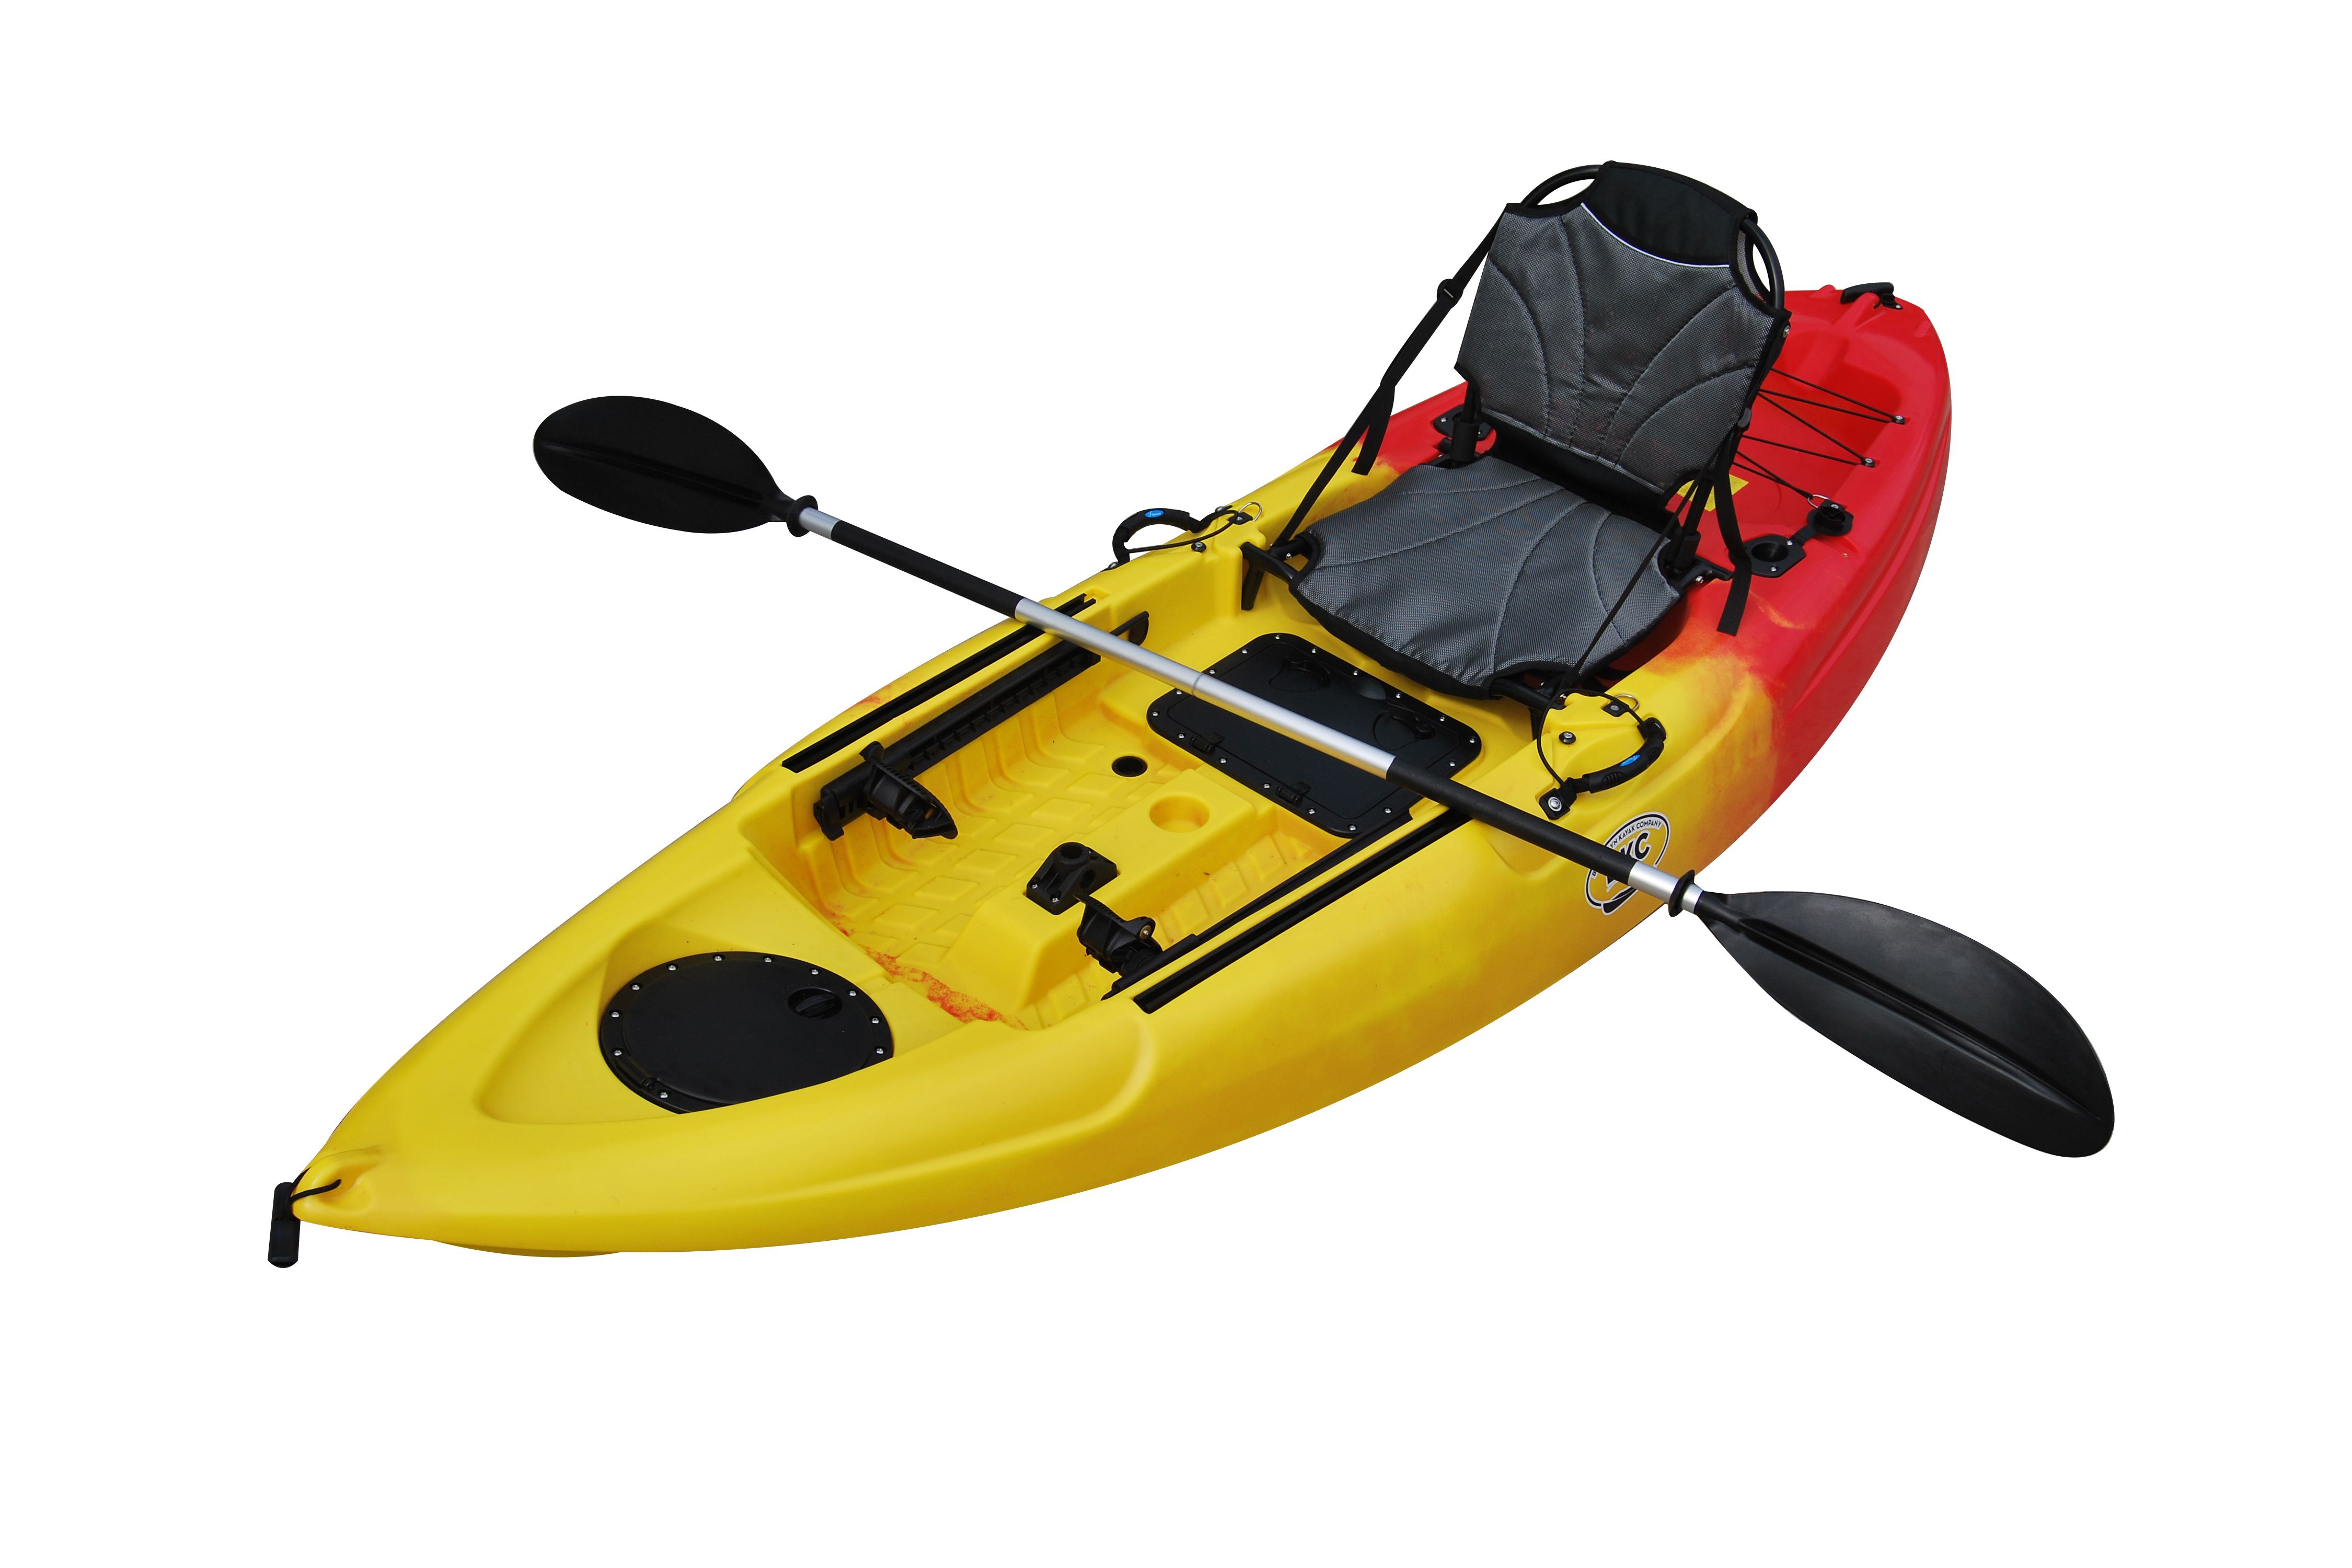 Bassyaks, Bassyaks Motor Systems [Kayak Angler Buyer's Guide]